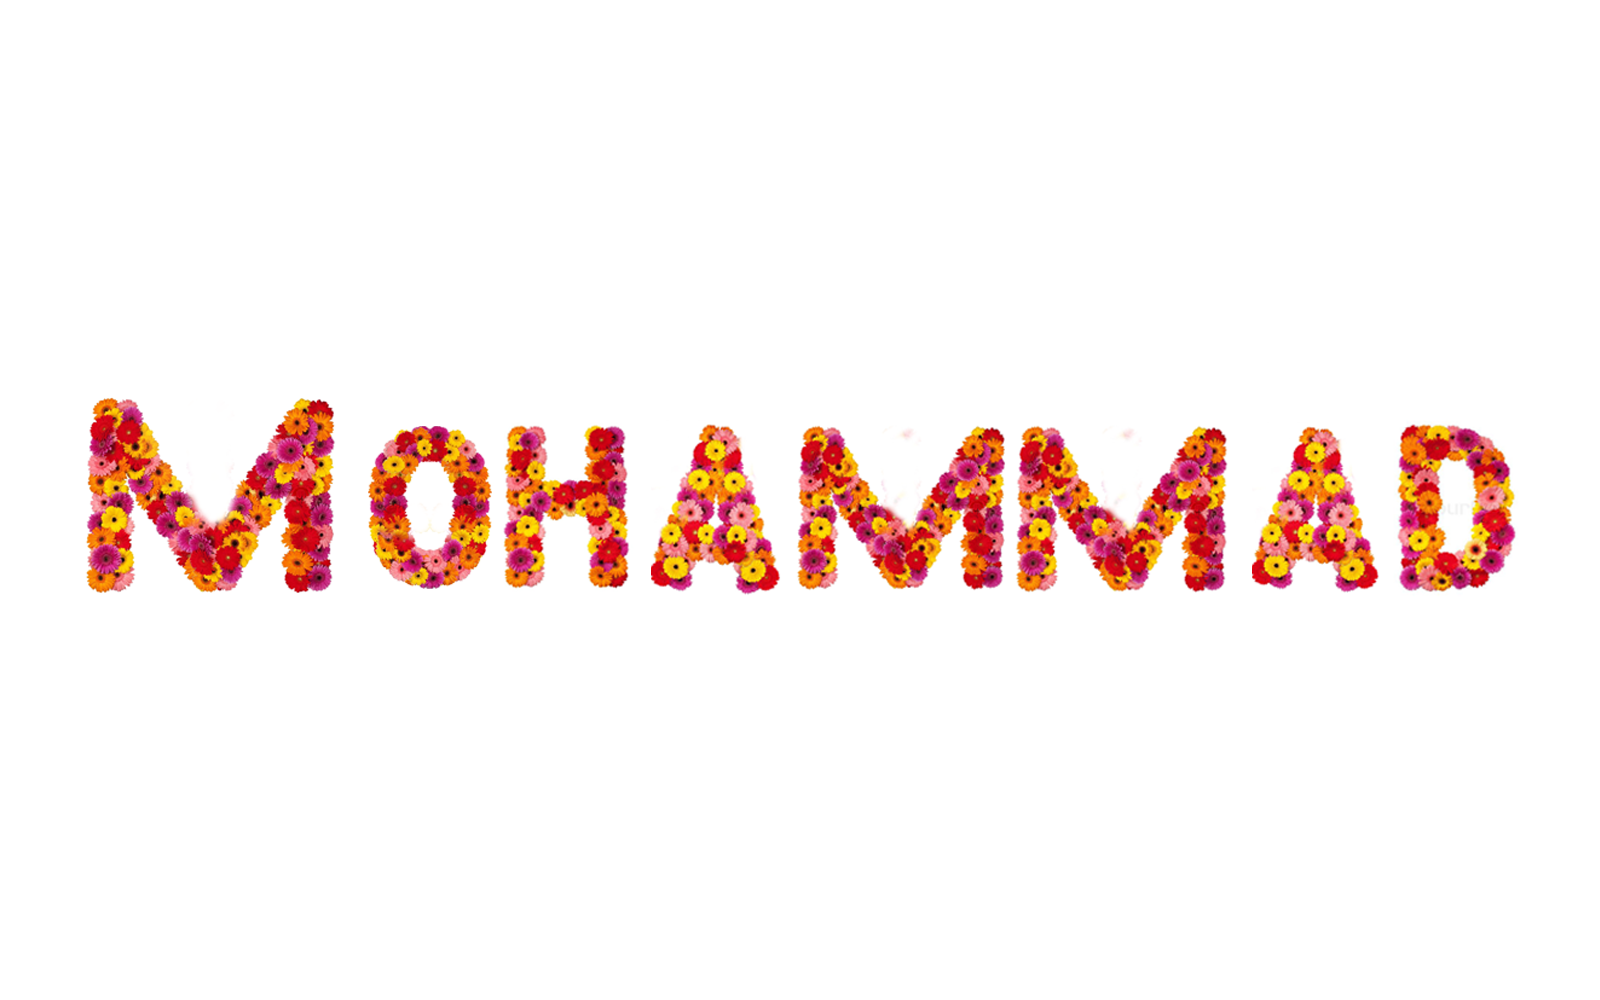 معنى اسم محمد